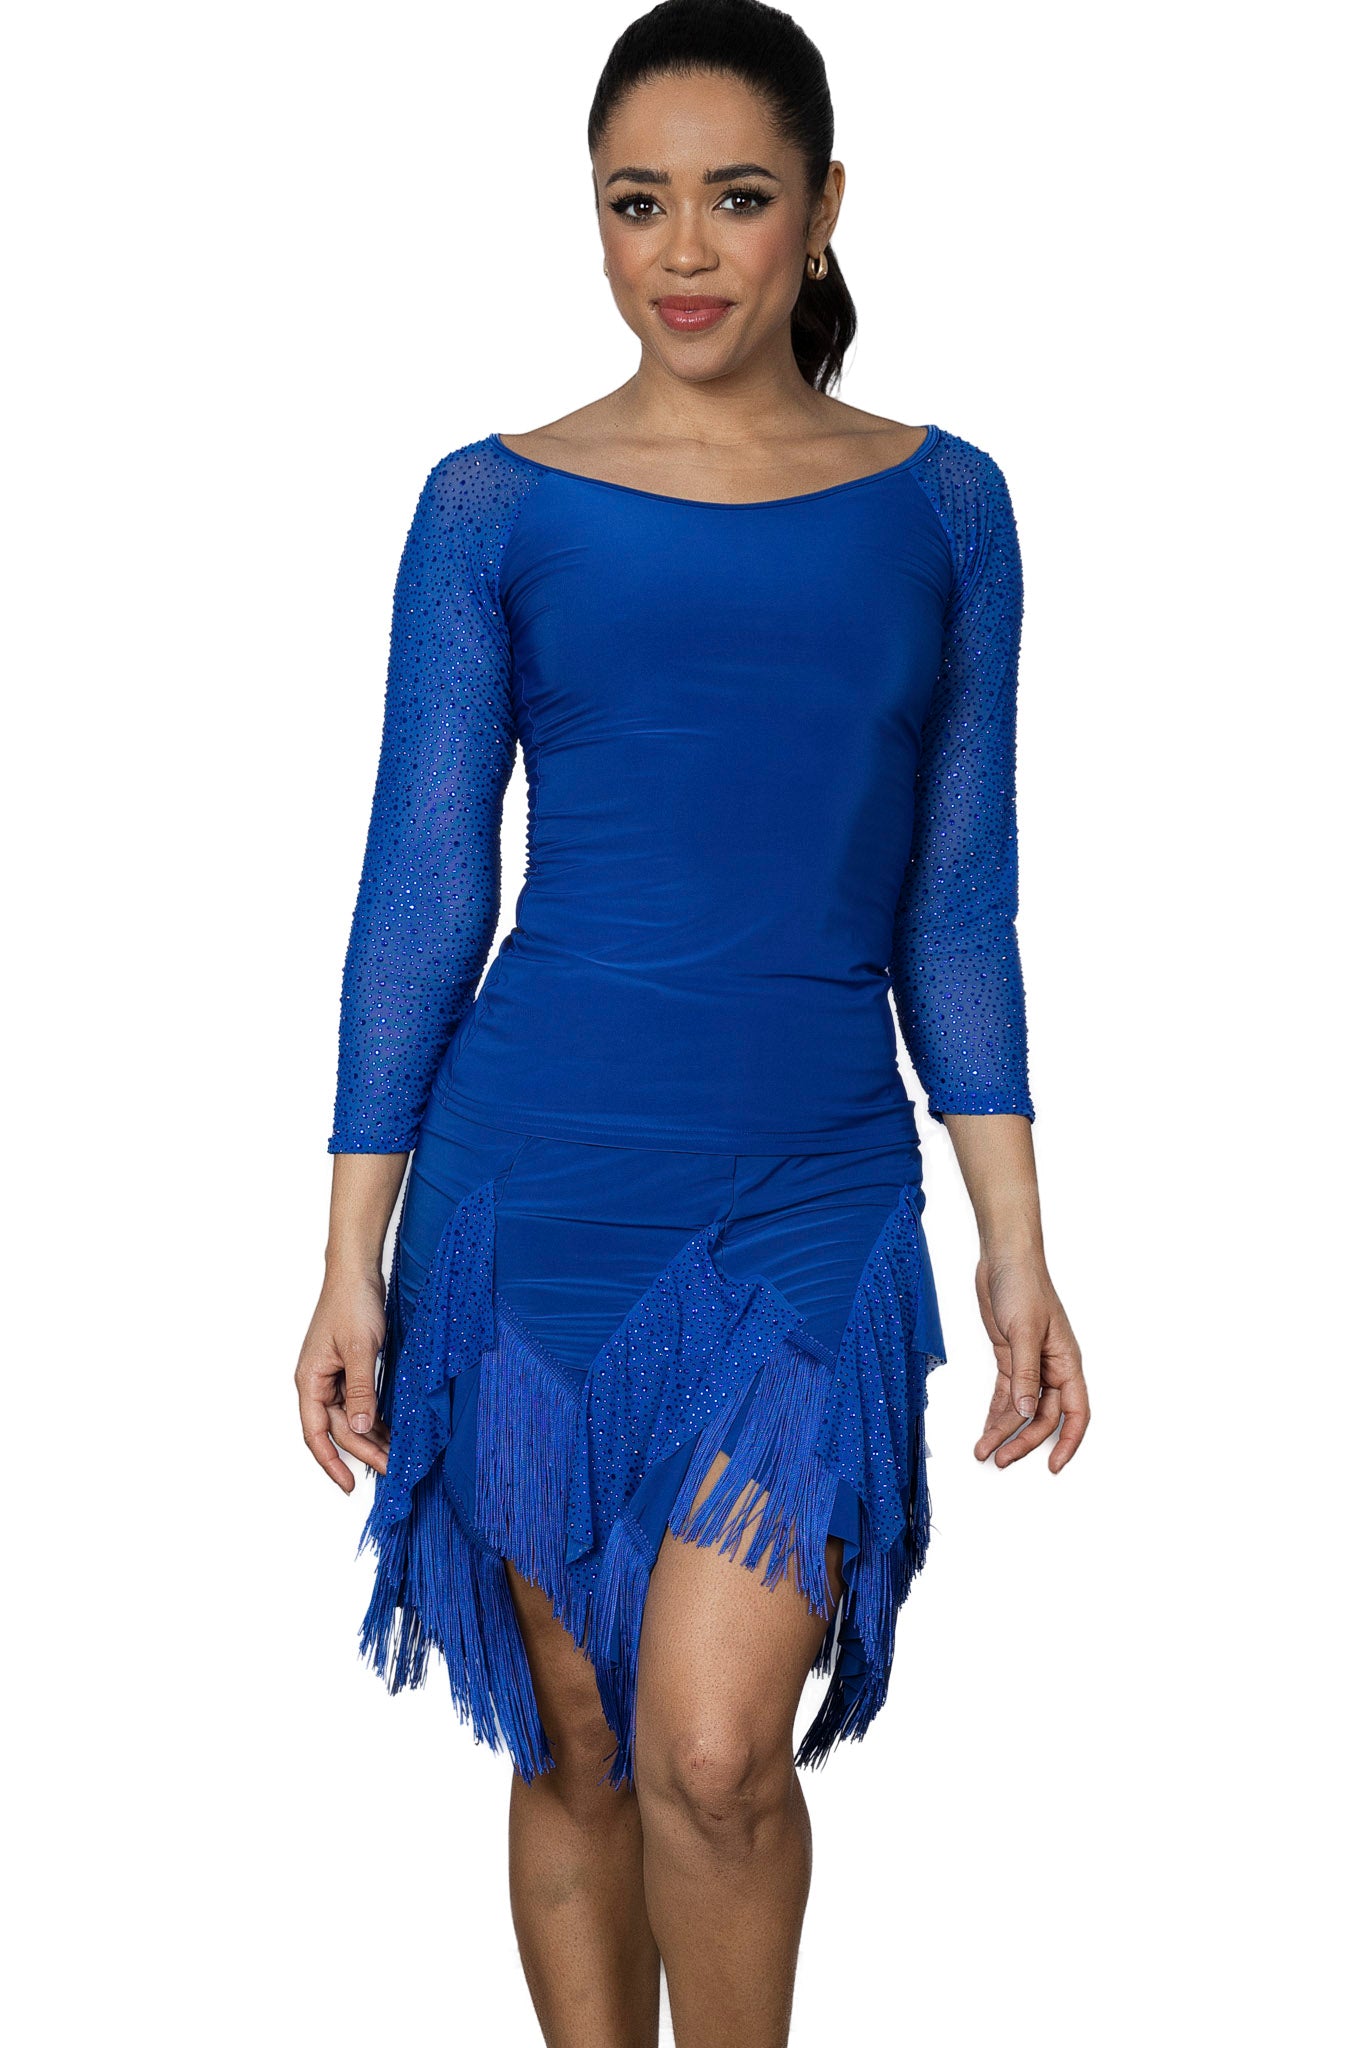 Women's blue dancing top with mesh rhinestone sleeves